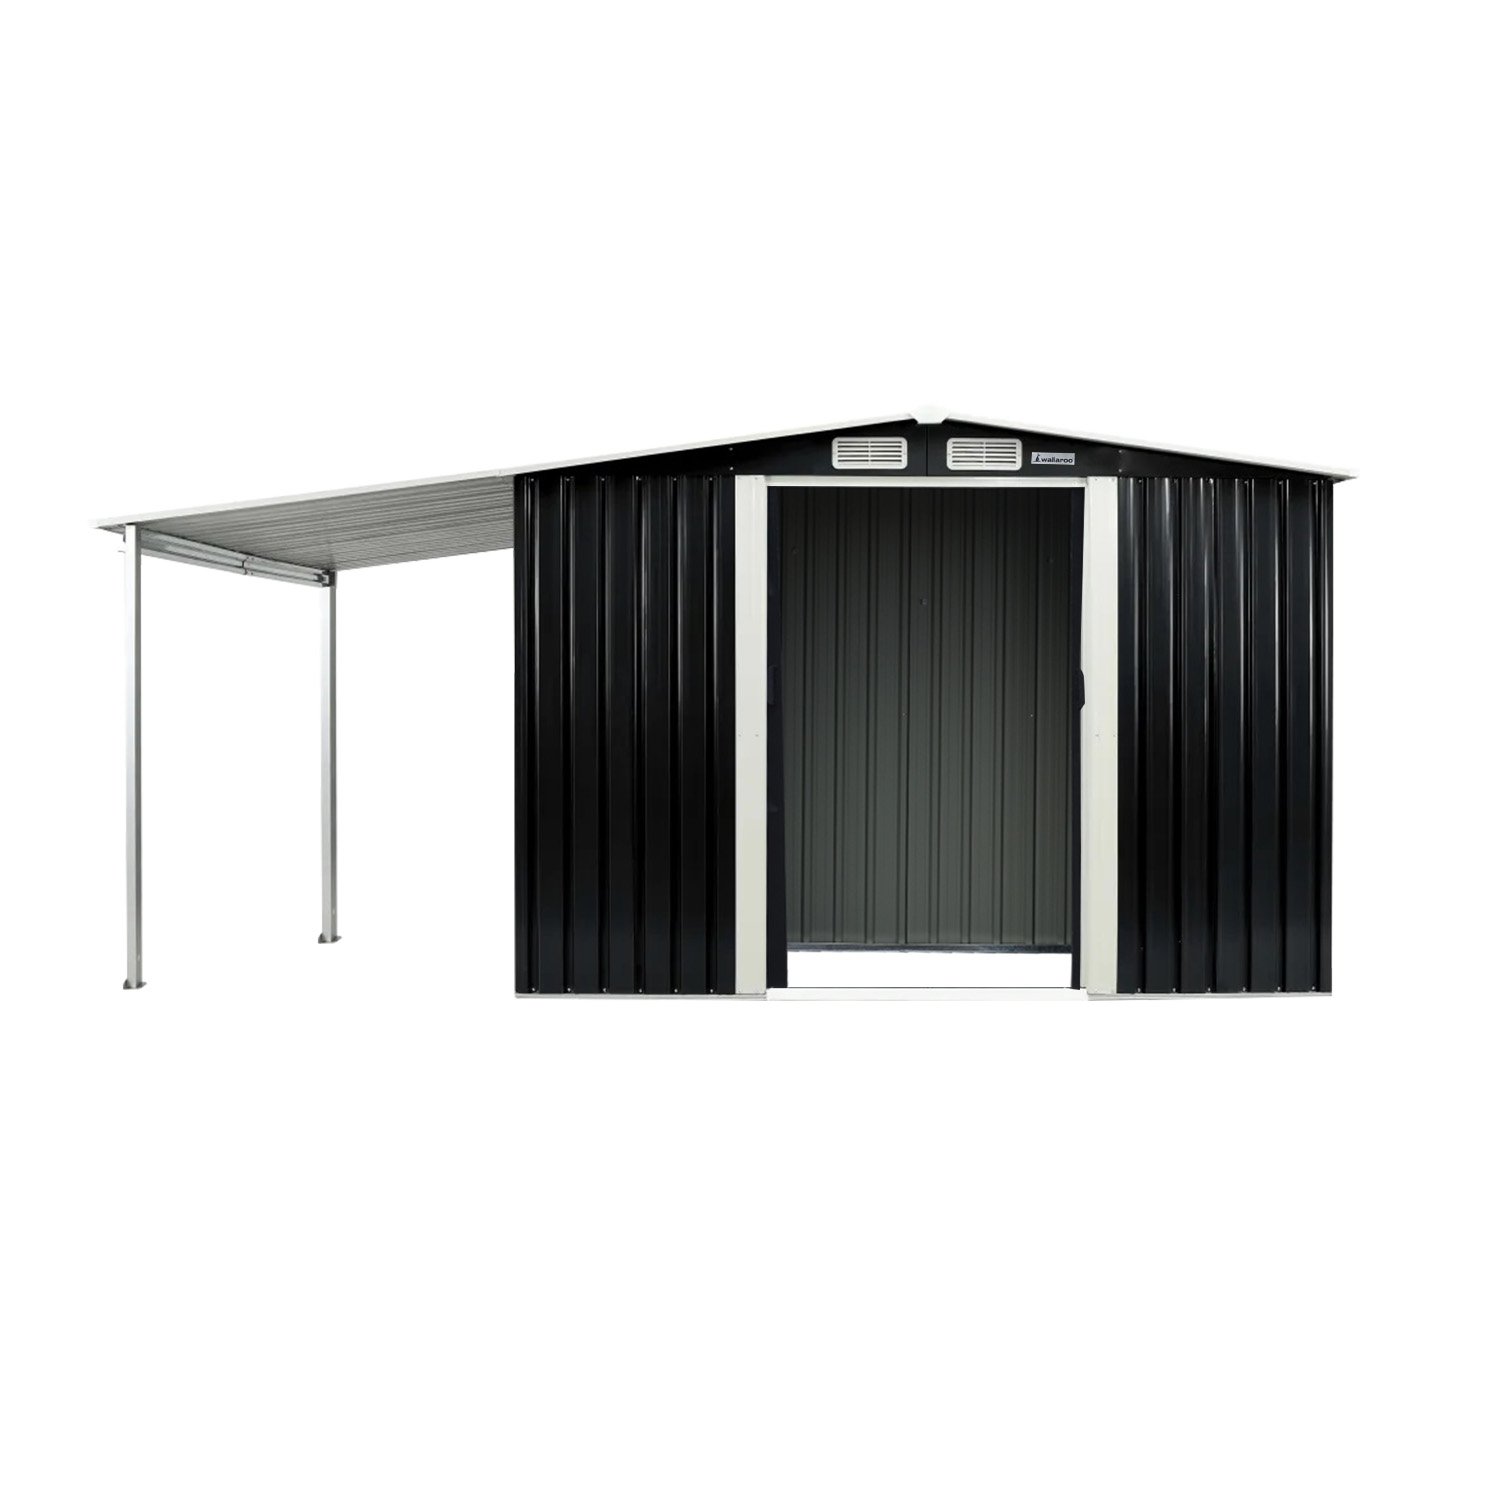 Wallaroo 10x8ft Zinc Steel Garden Shed with Open Storage - Black 1